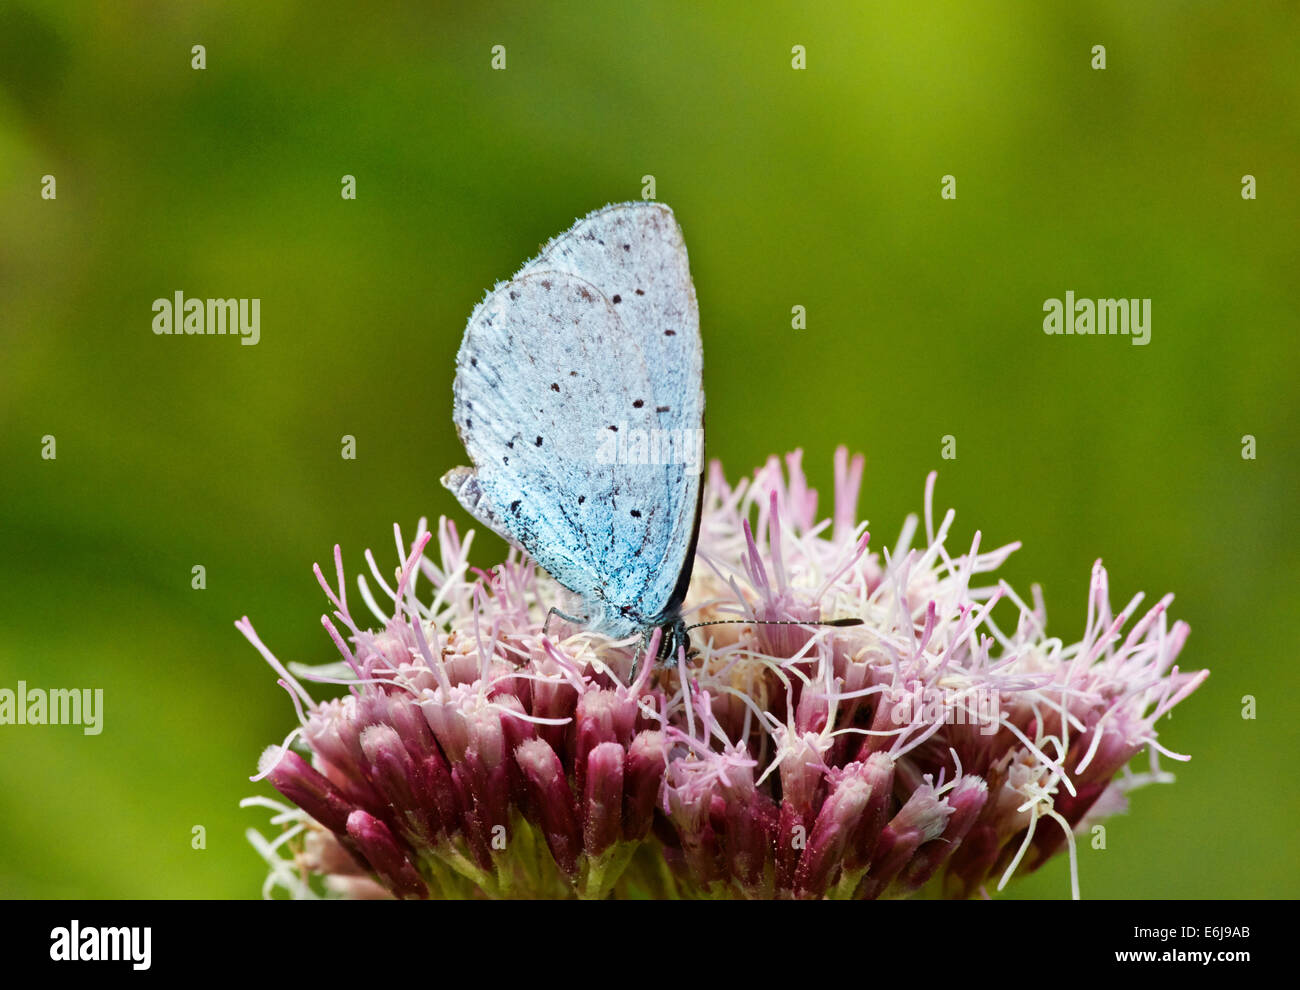 Holly Blue Butterfly se nourrissant de fleur Agrimony de chanvre. Tir de Steyning, Worthing, Sussex, Angleterre. Banque D'Images